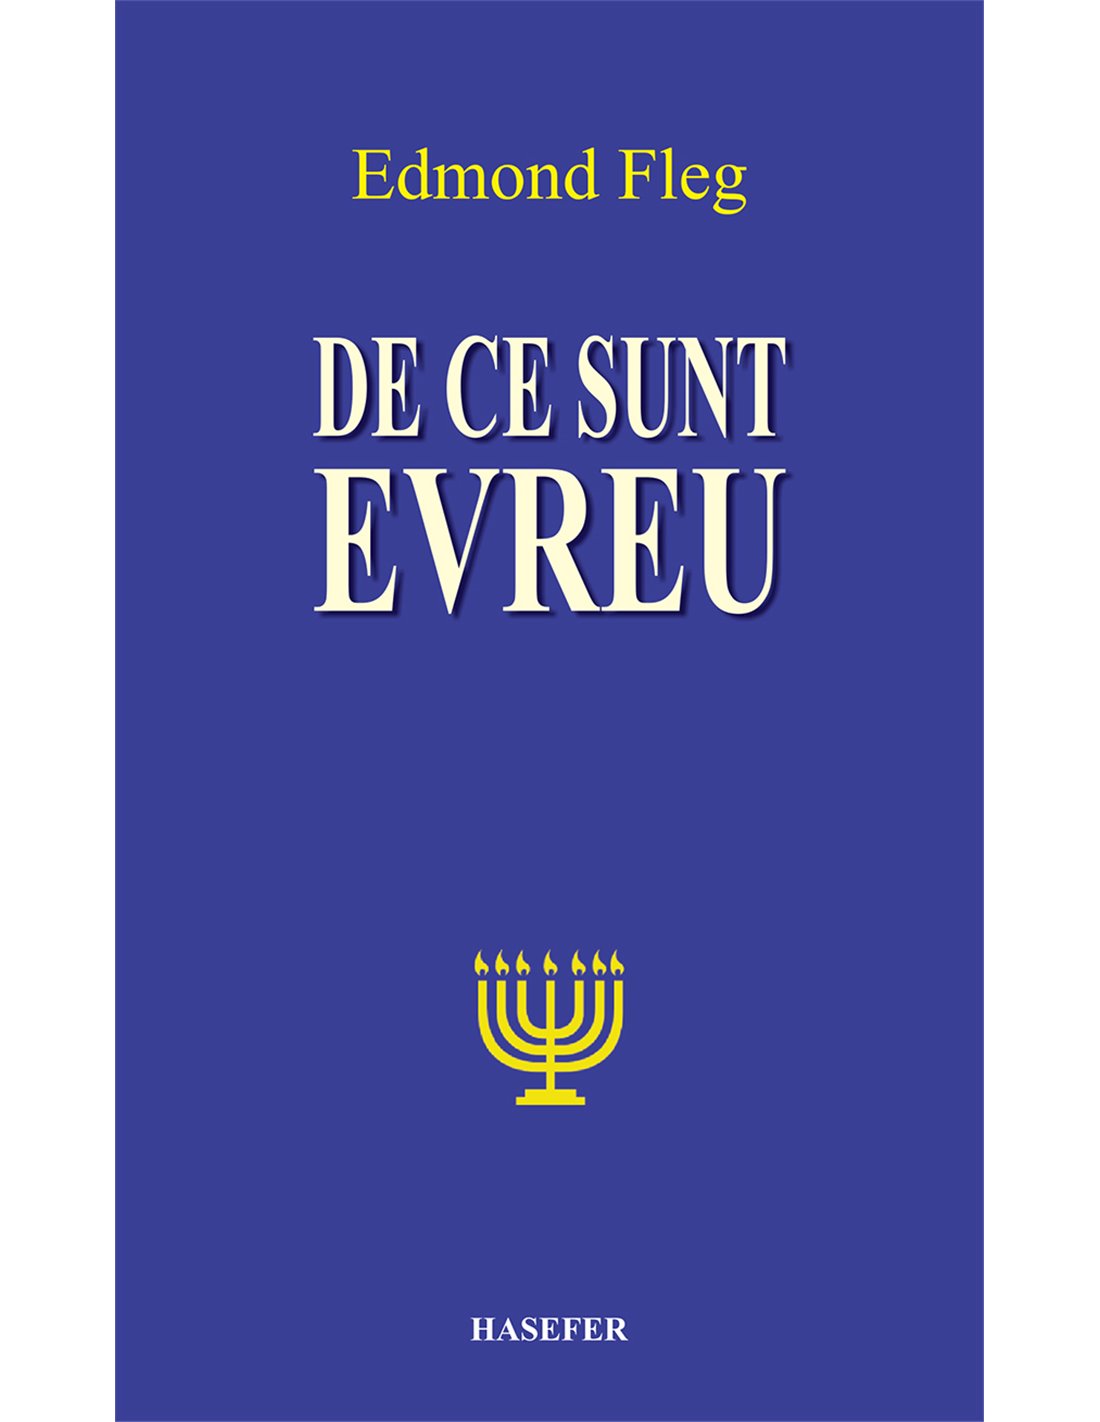 De ce sunt evreu - Edmond Fleg | Editura Hasefer